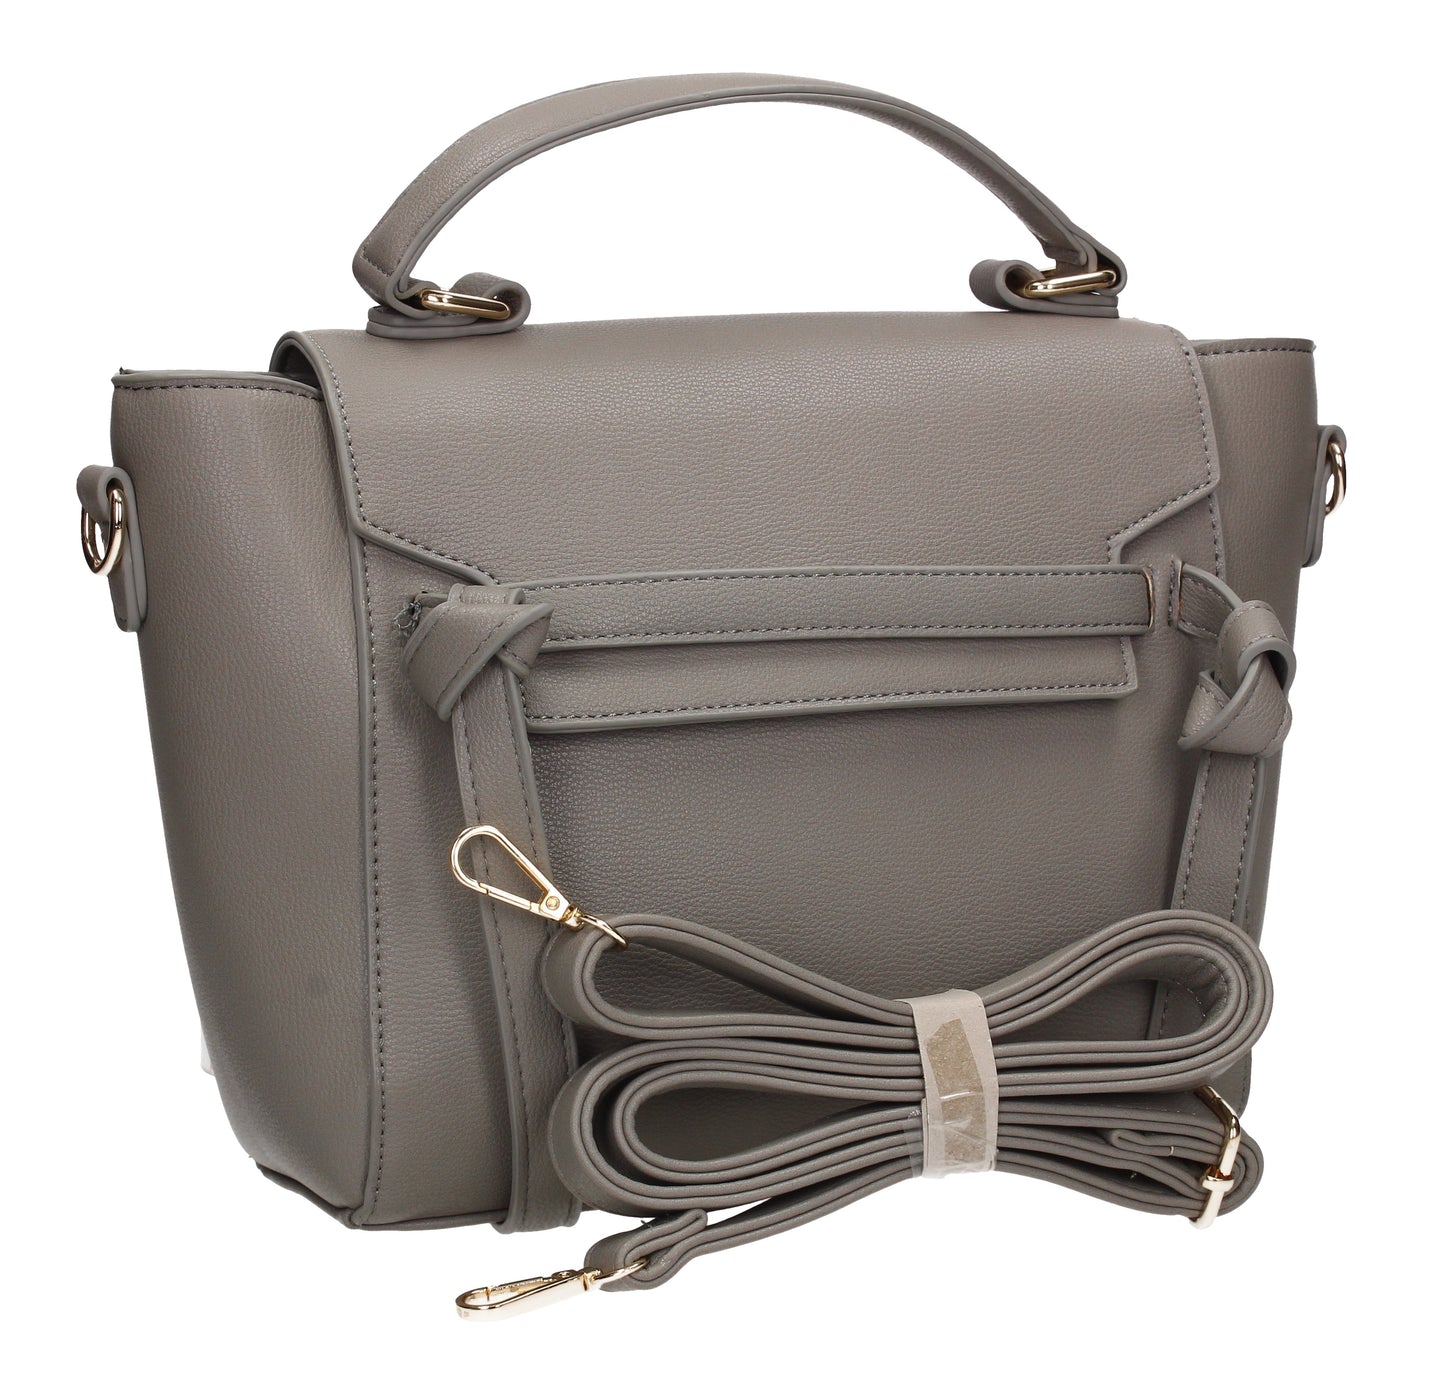 Buy your Juana Handbag Grey Today! Buy with confidence from Swankyswans